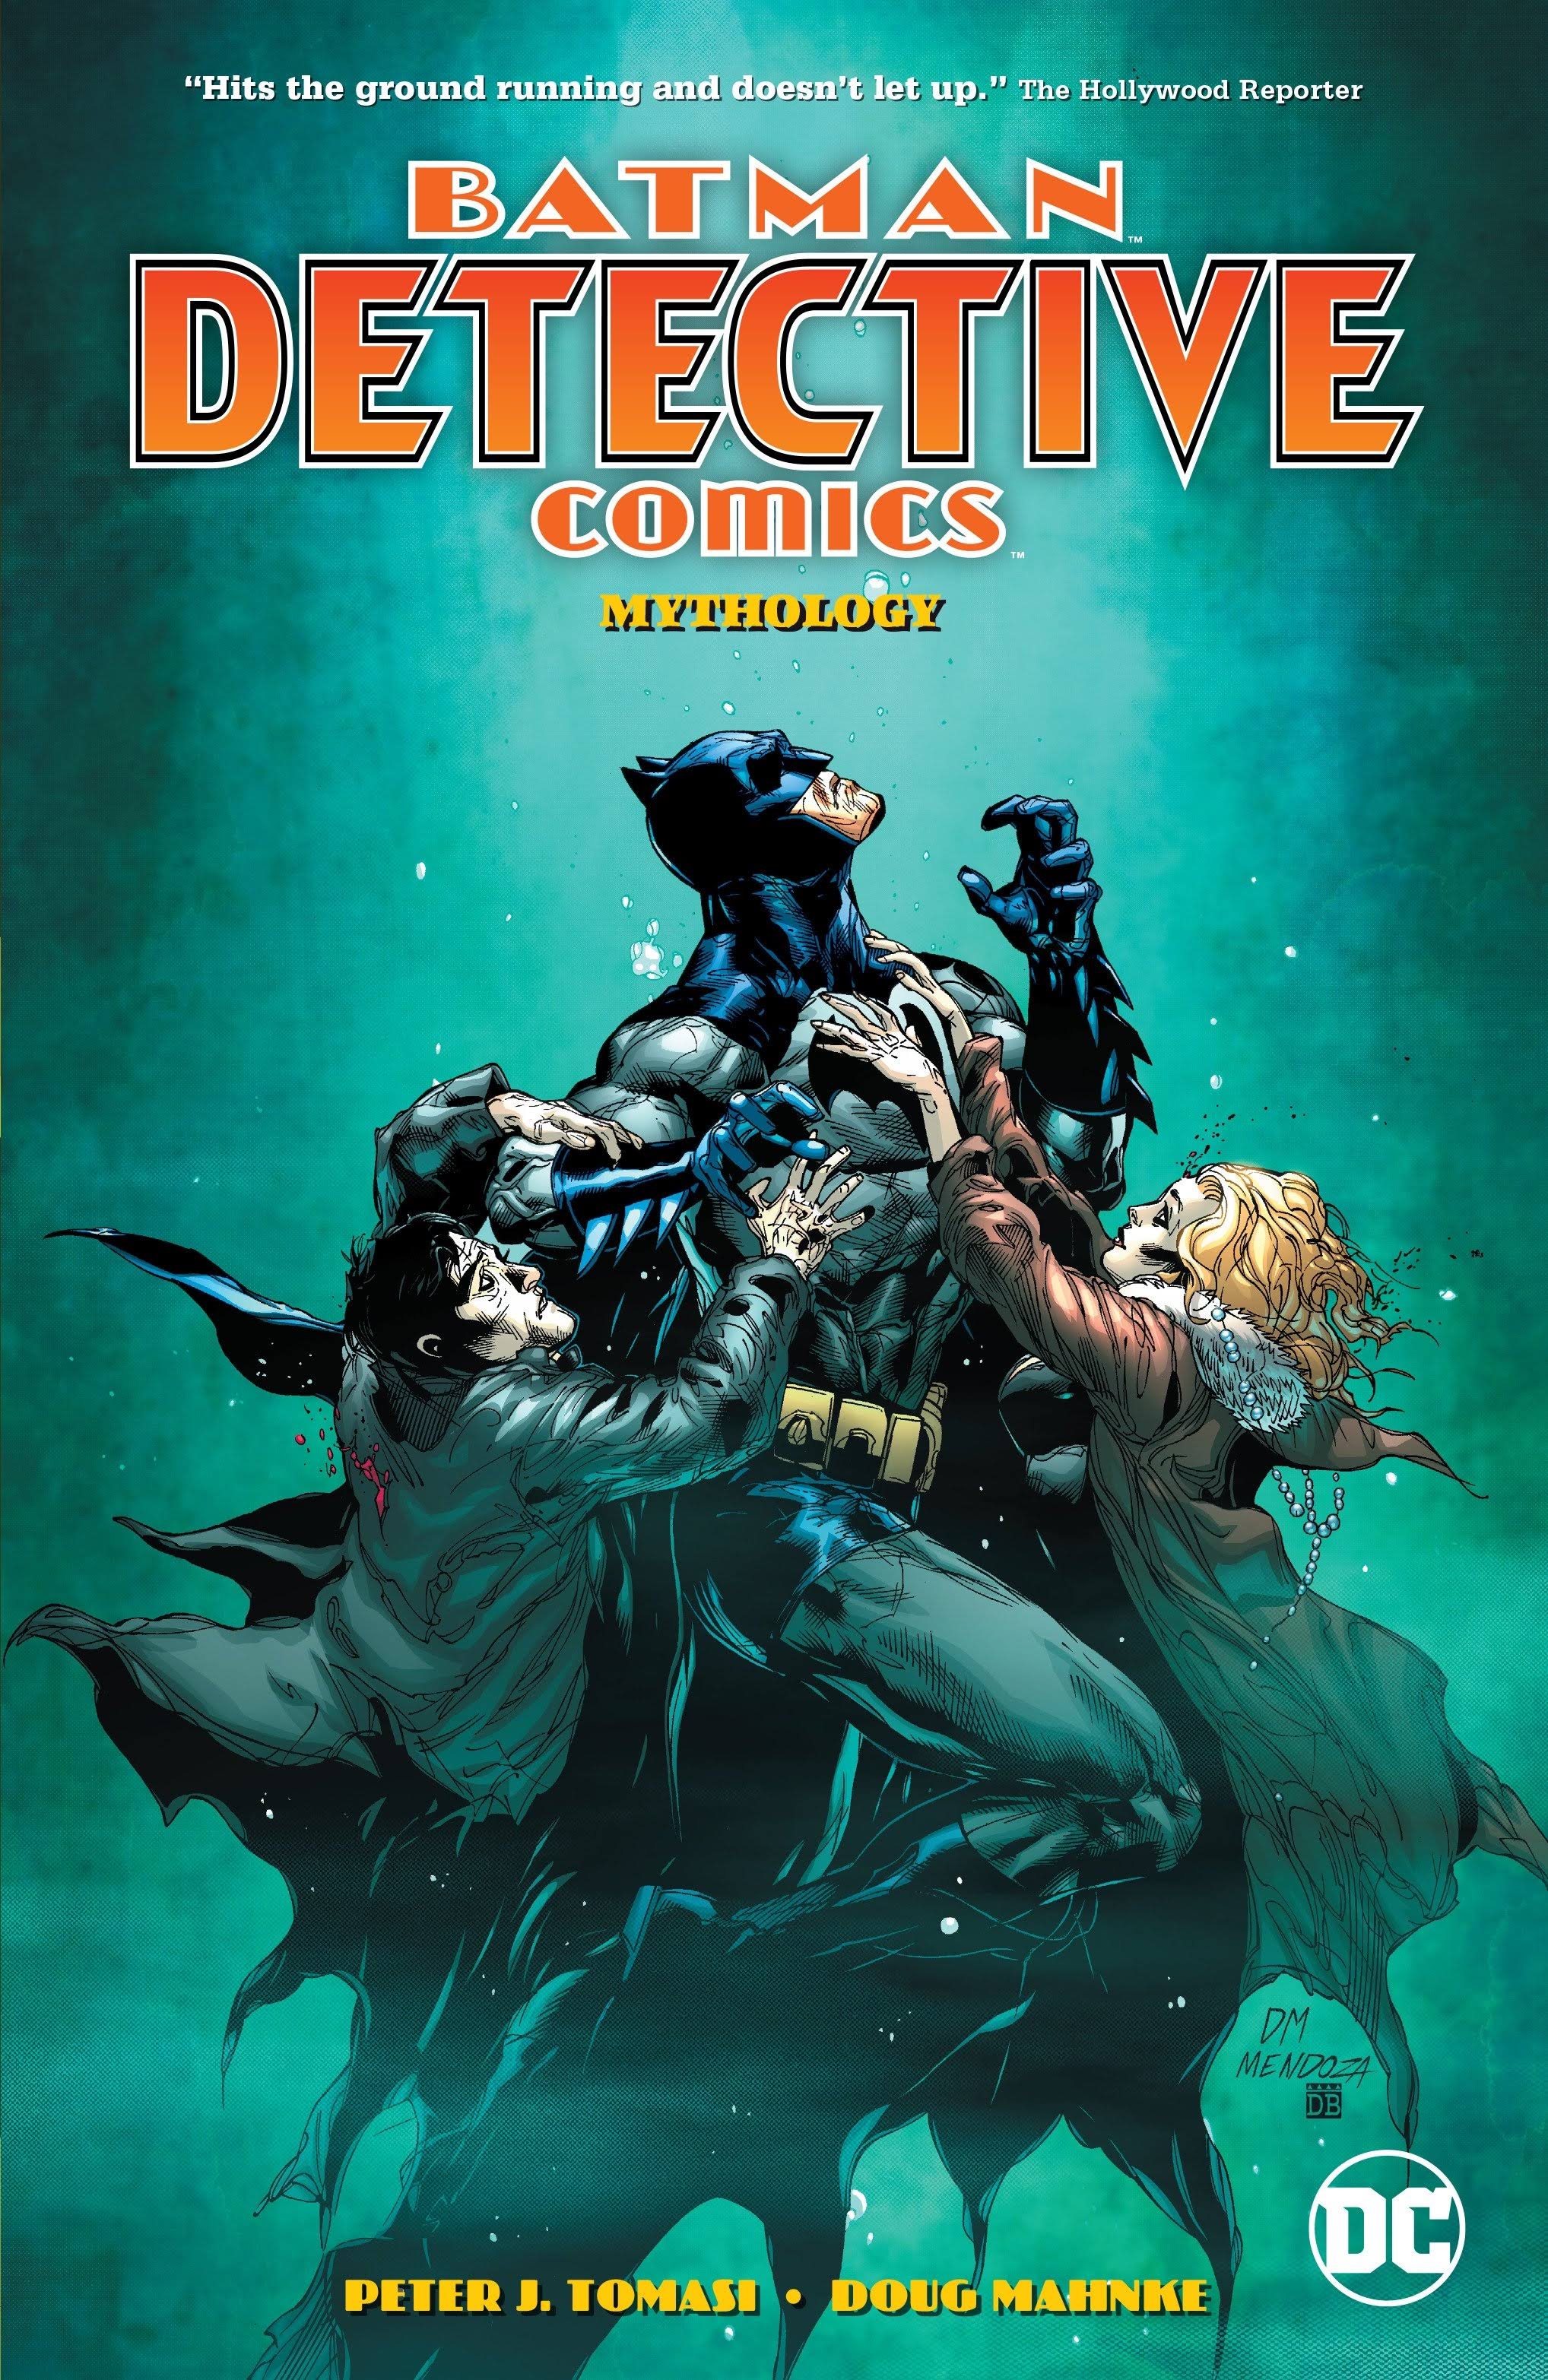 Batman: Detective Comics Vol. 1: Mythology [Book]